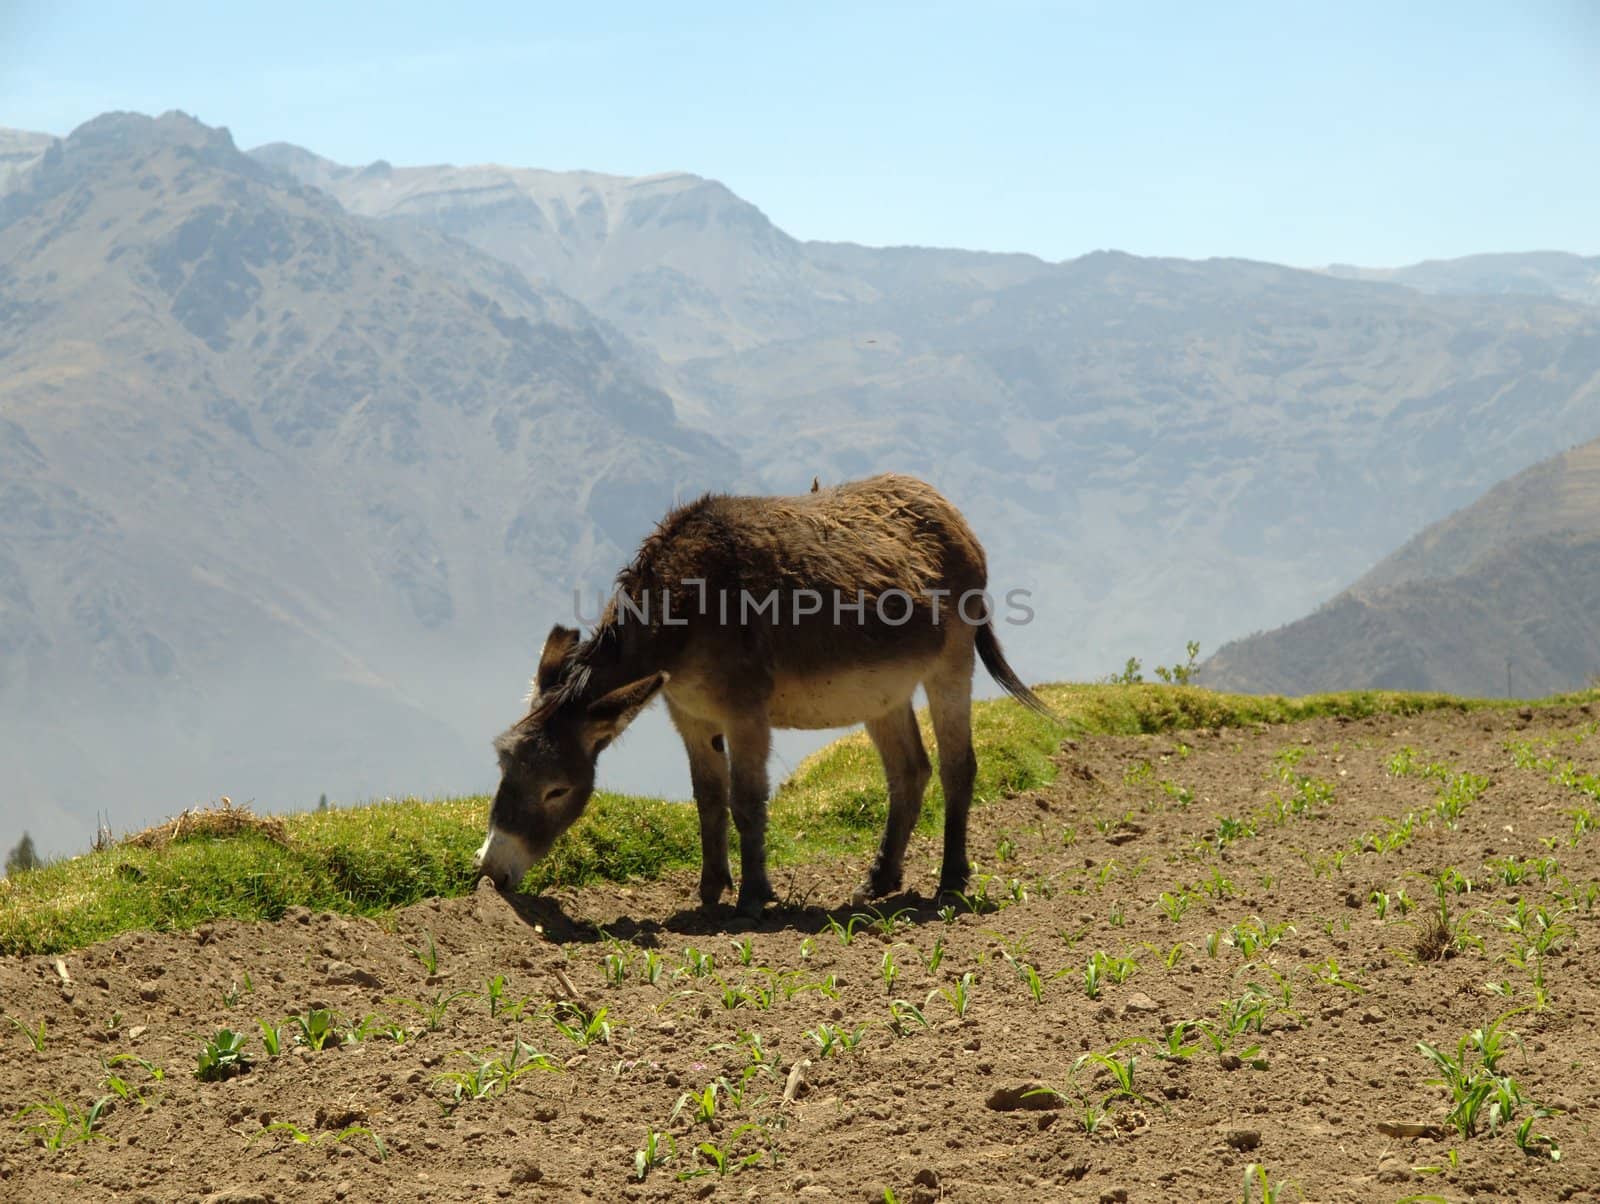 Feeding donkey against clear blue sky in mountain of Peru